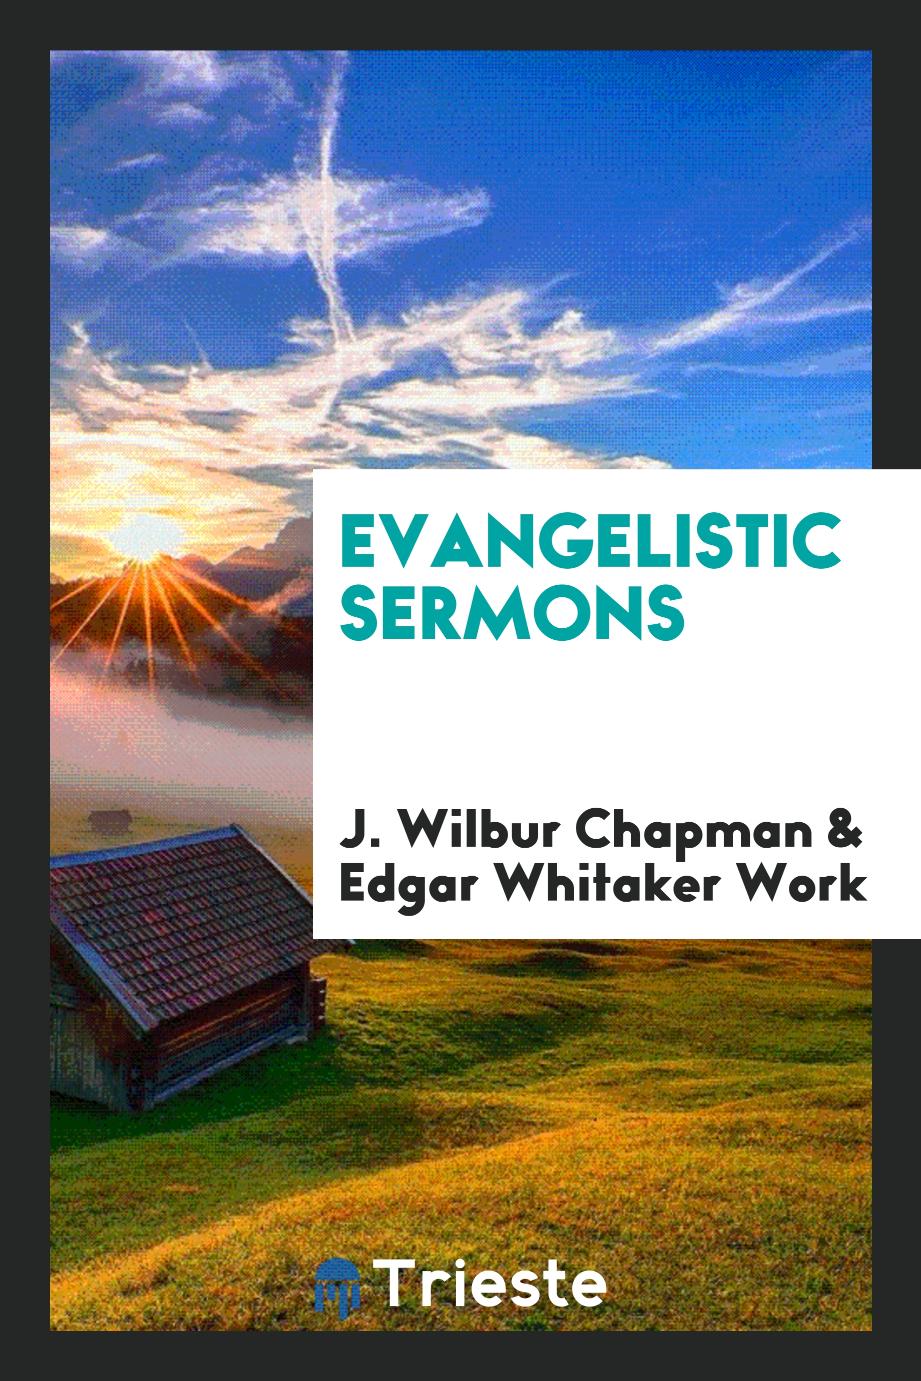 J. Wilbur Chapman, Edgar Whitaker Work - Evangelistic sermons